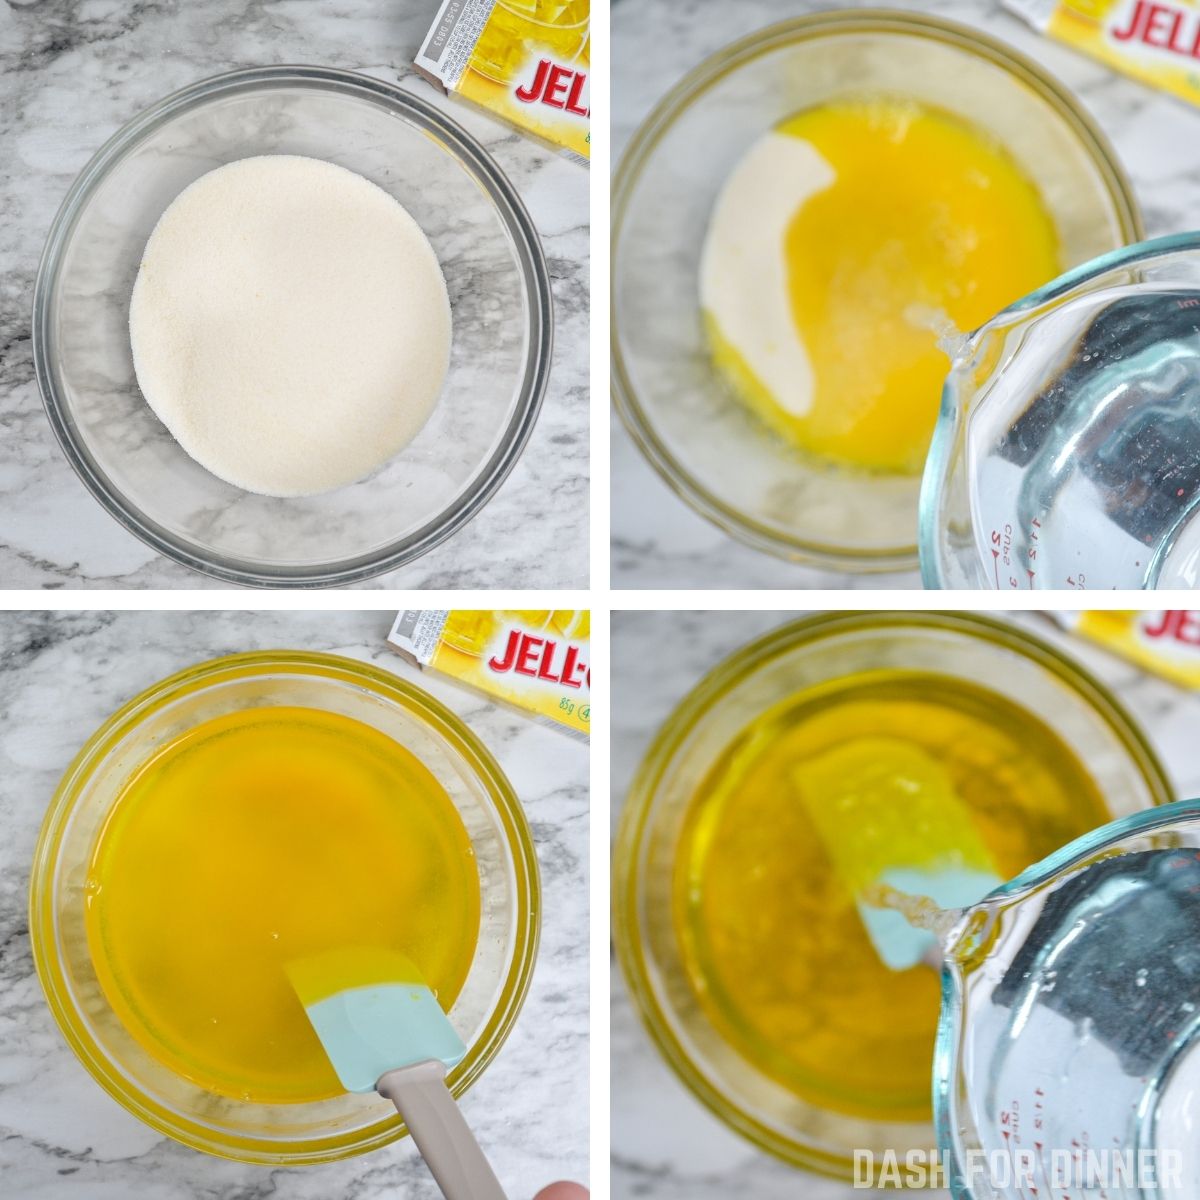 How to make yellow Jell-O